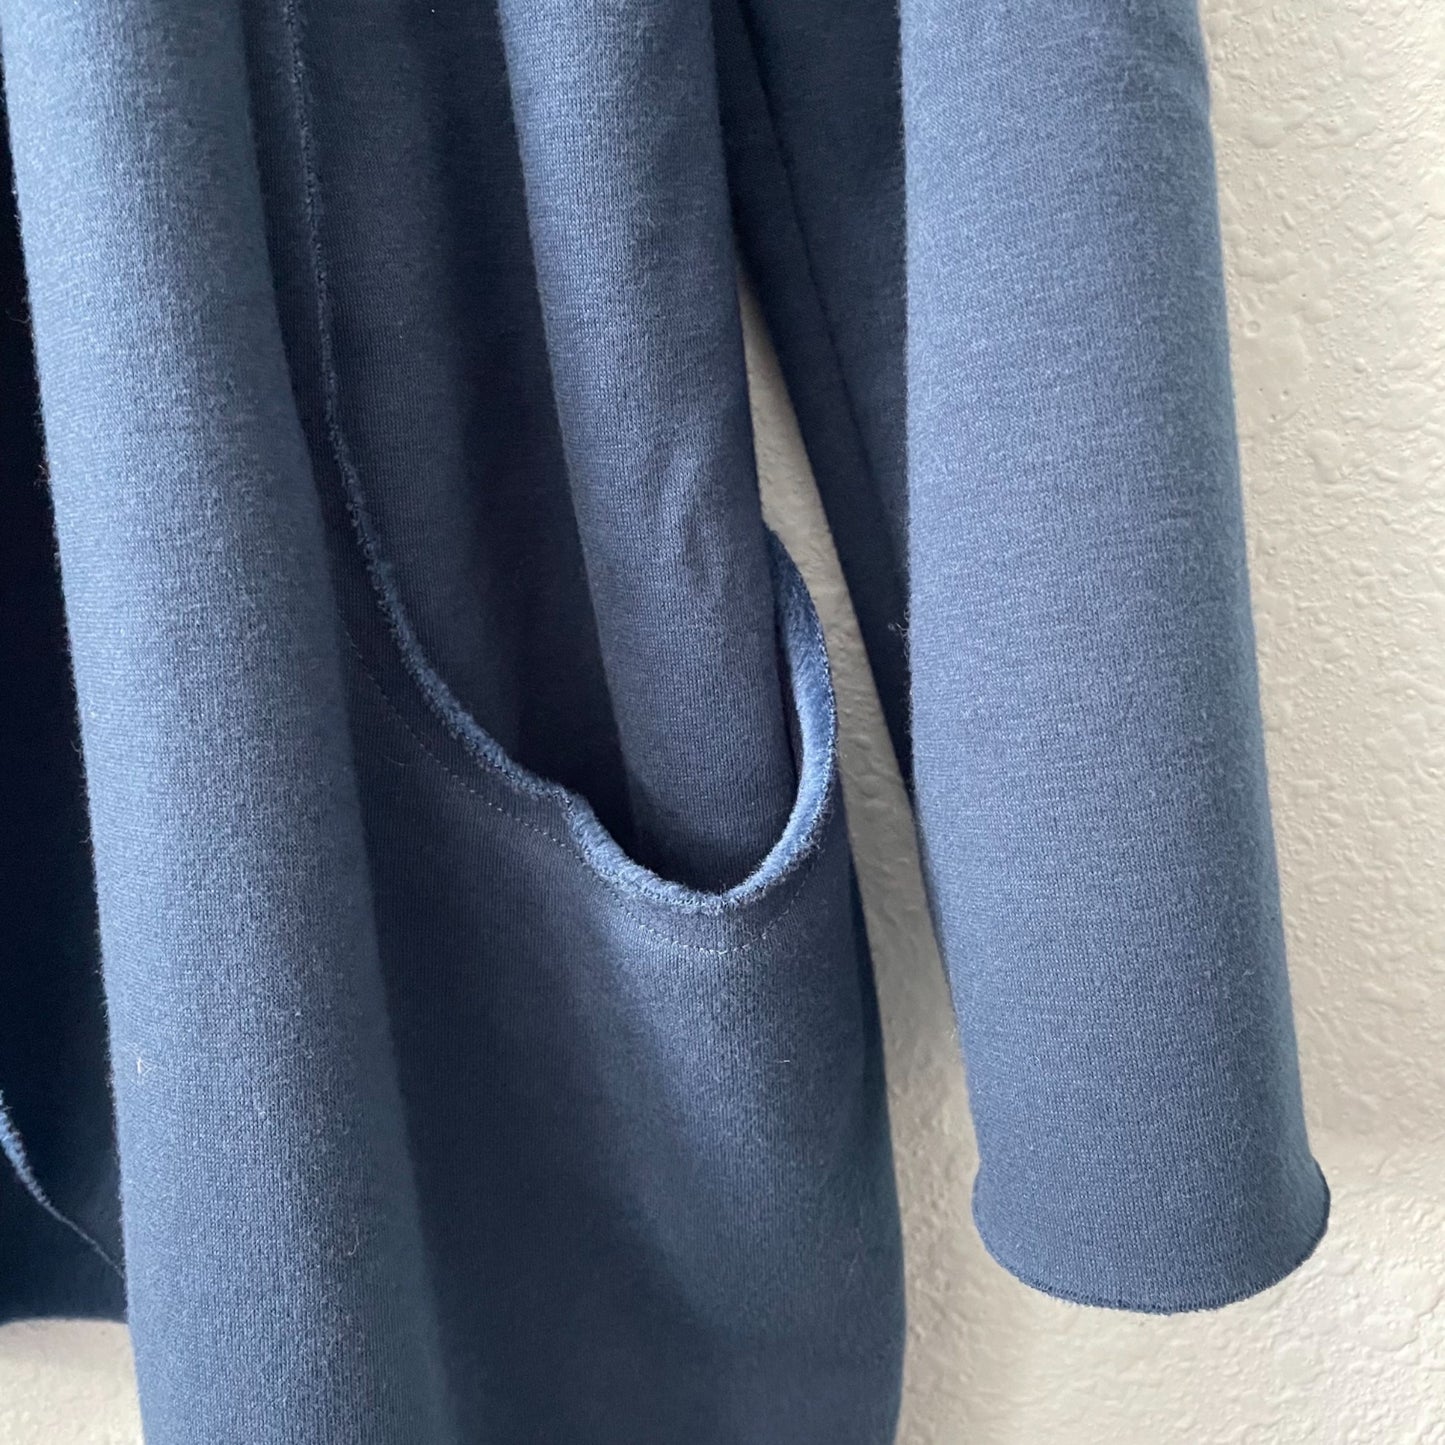 Soft Surroundings Blue Cozy Carefree Faux Fur Lined Jacket Size PM